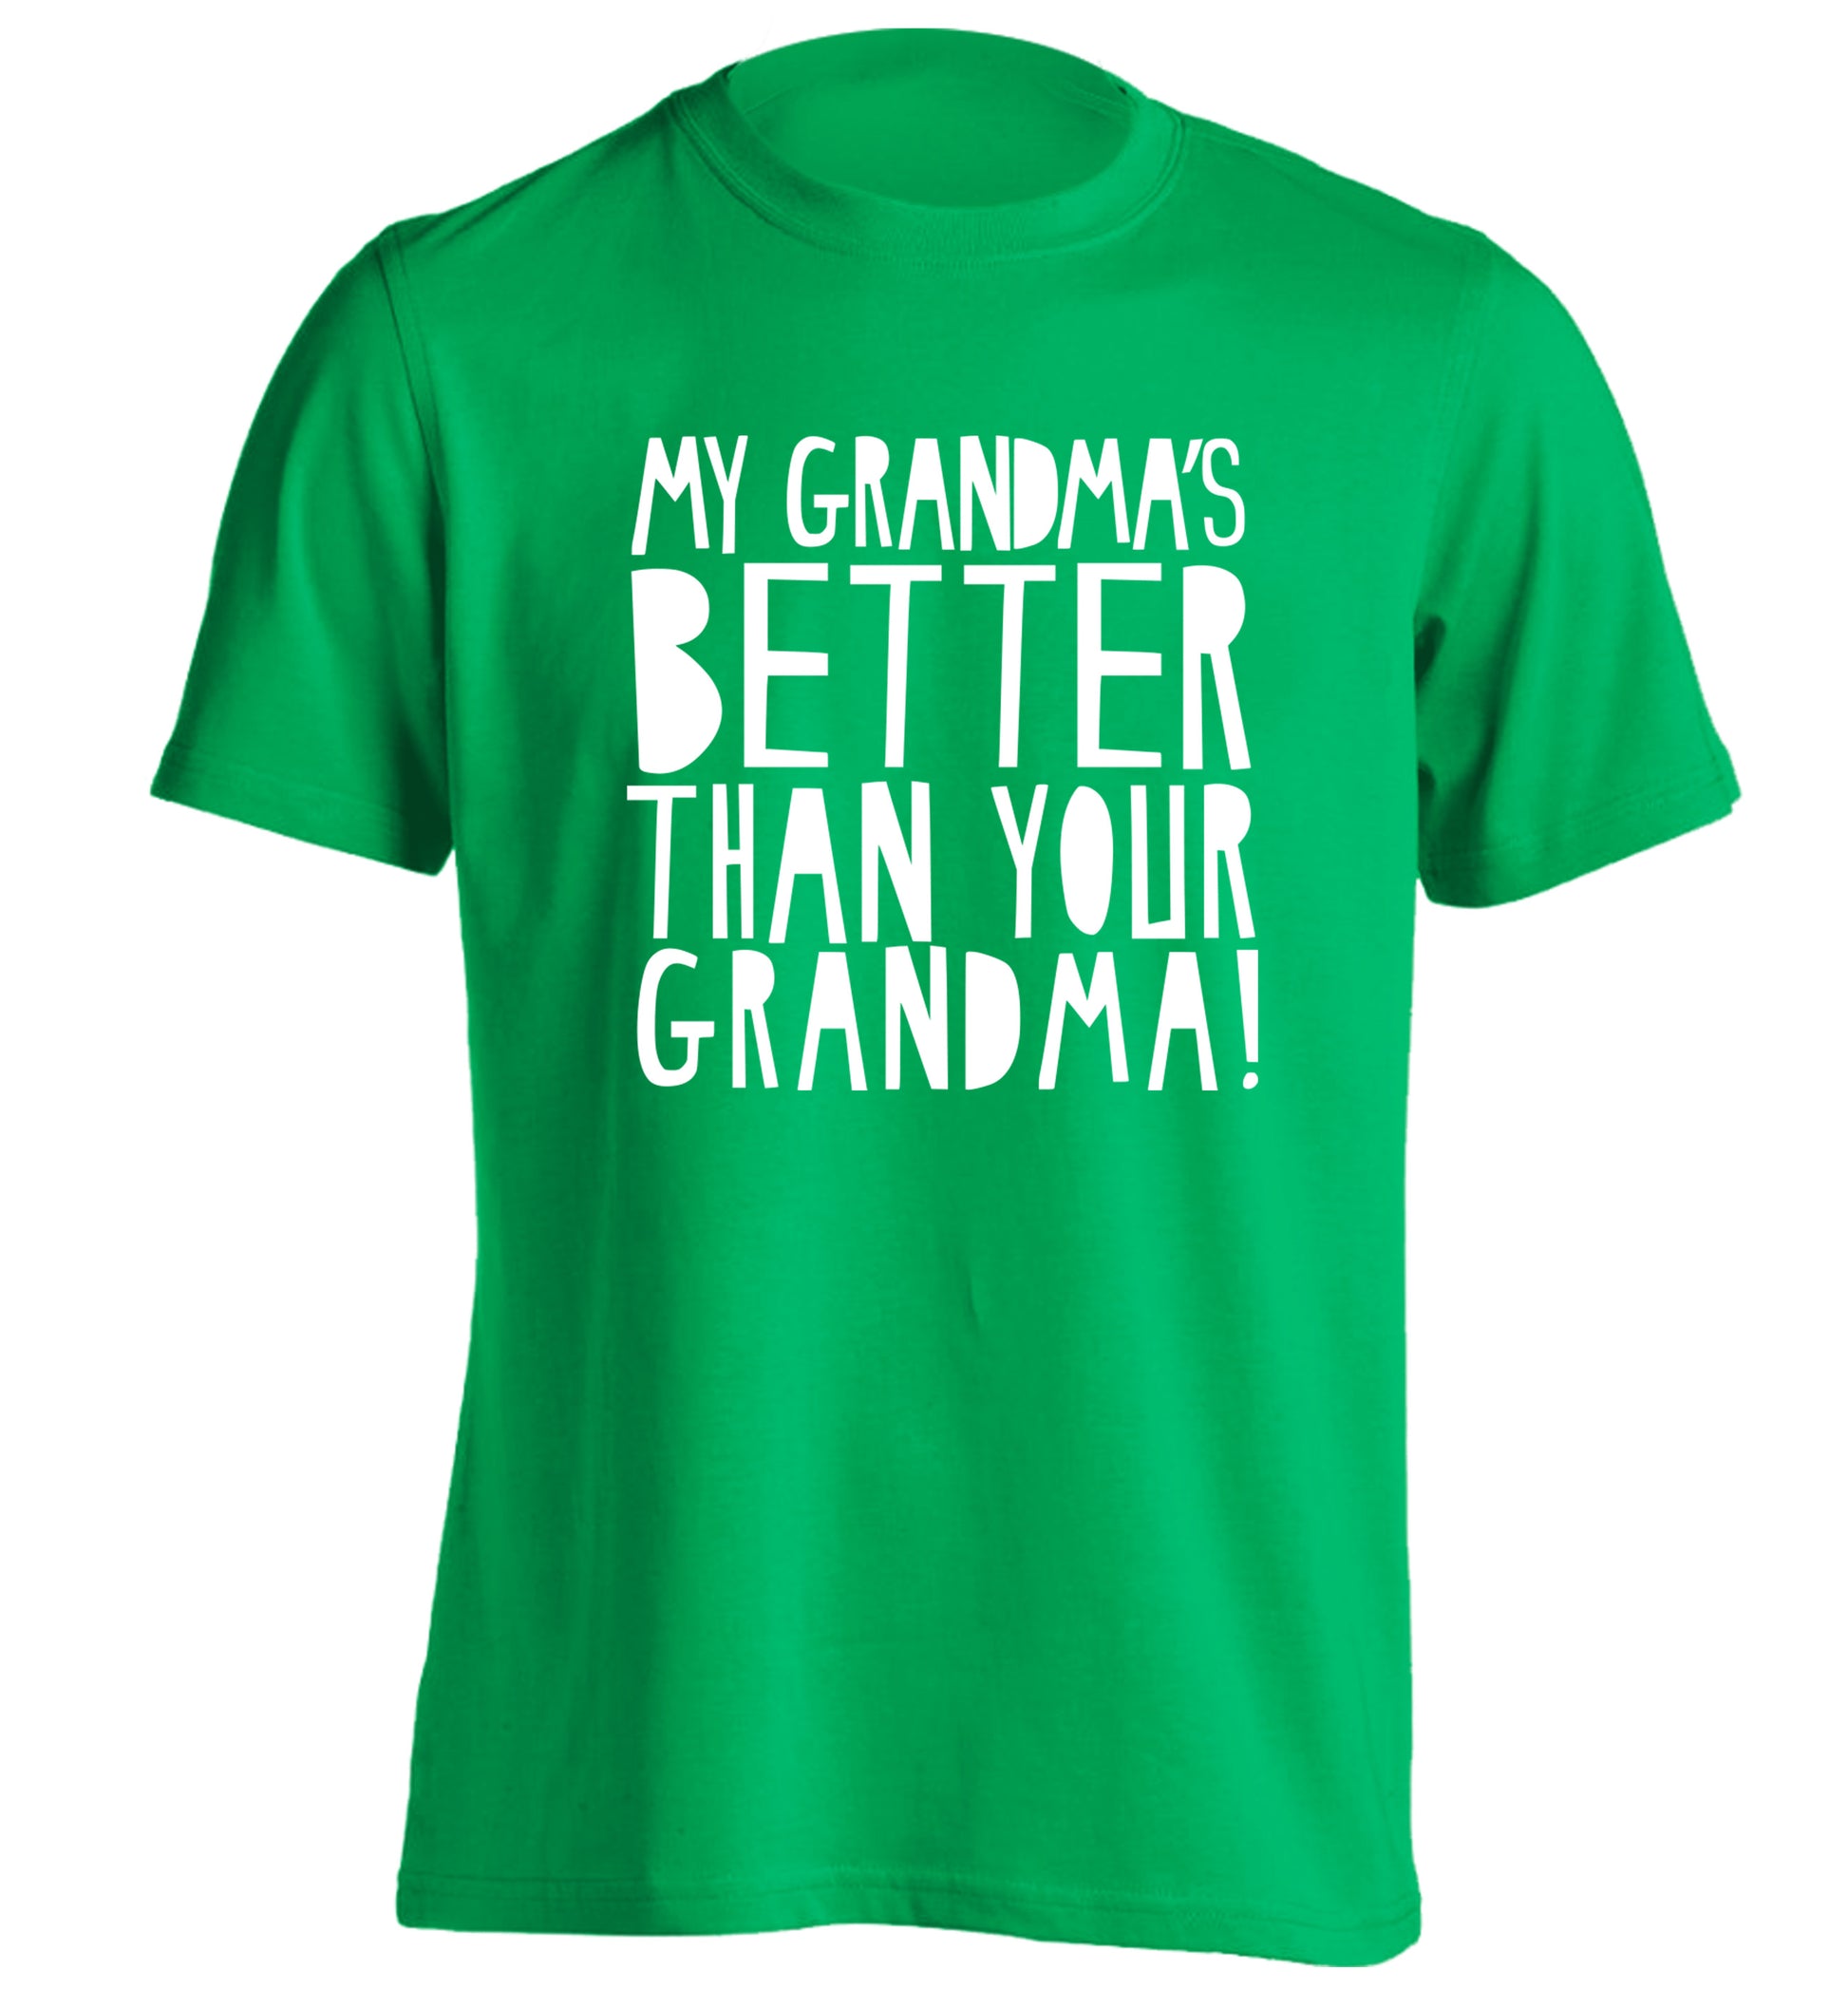 My grandma's better than your grandma adults unisex green Tshirt 2XL